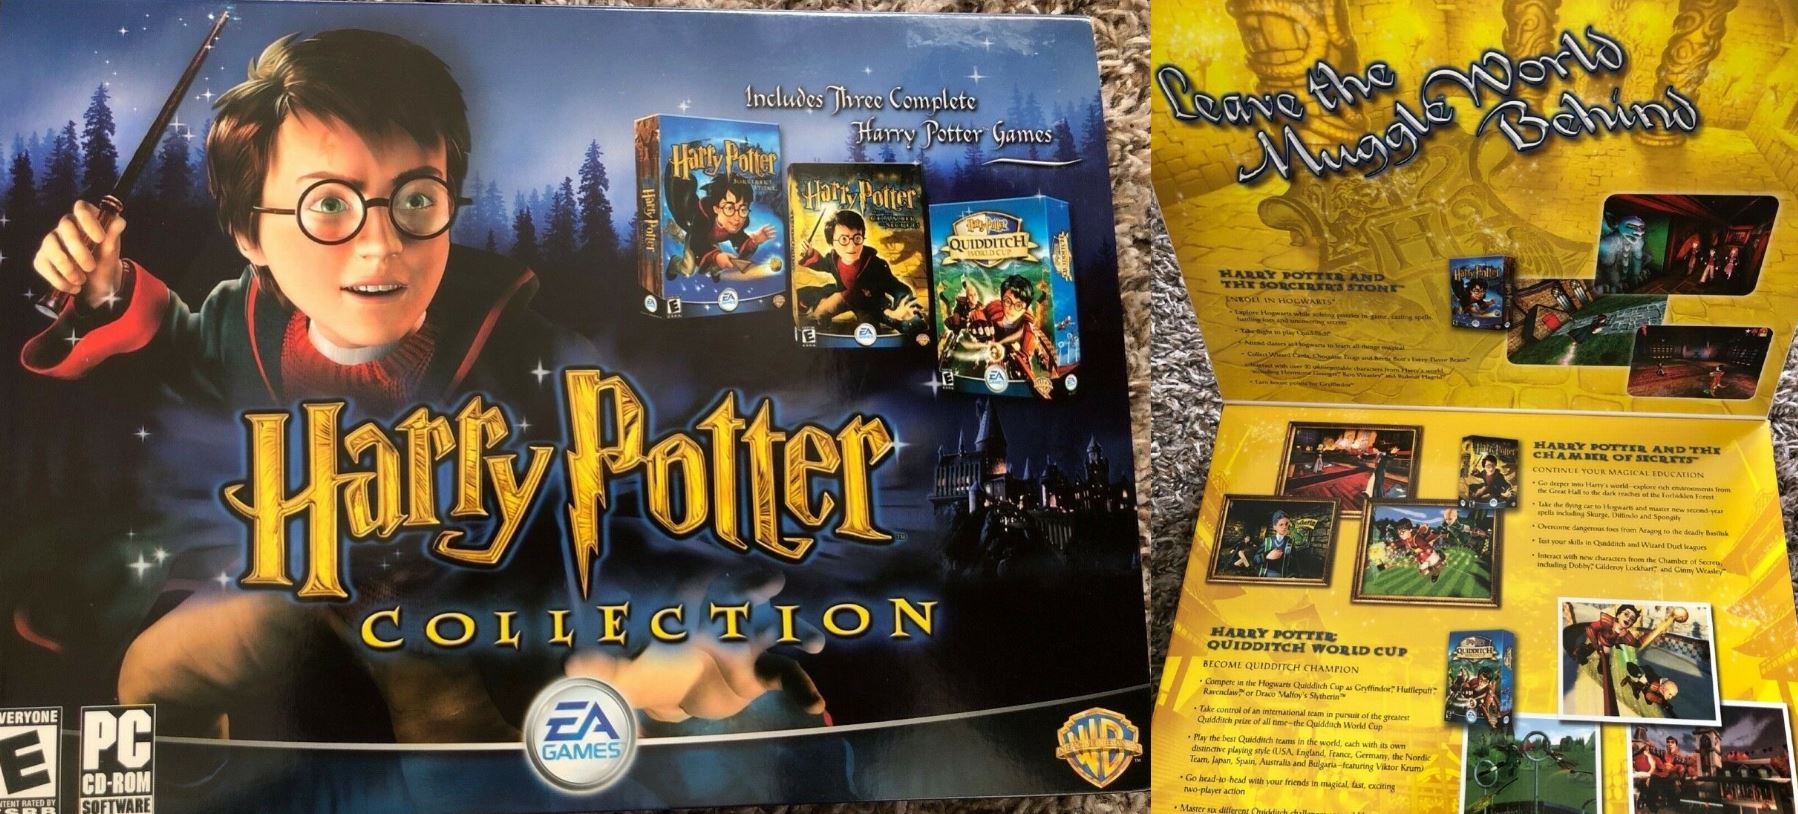 Harry Potter Games: Software Box Art Release Variants (Windows PC